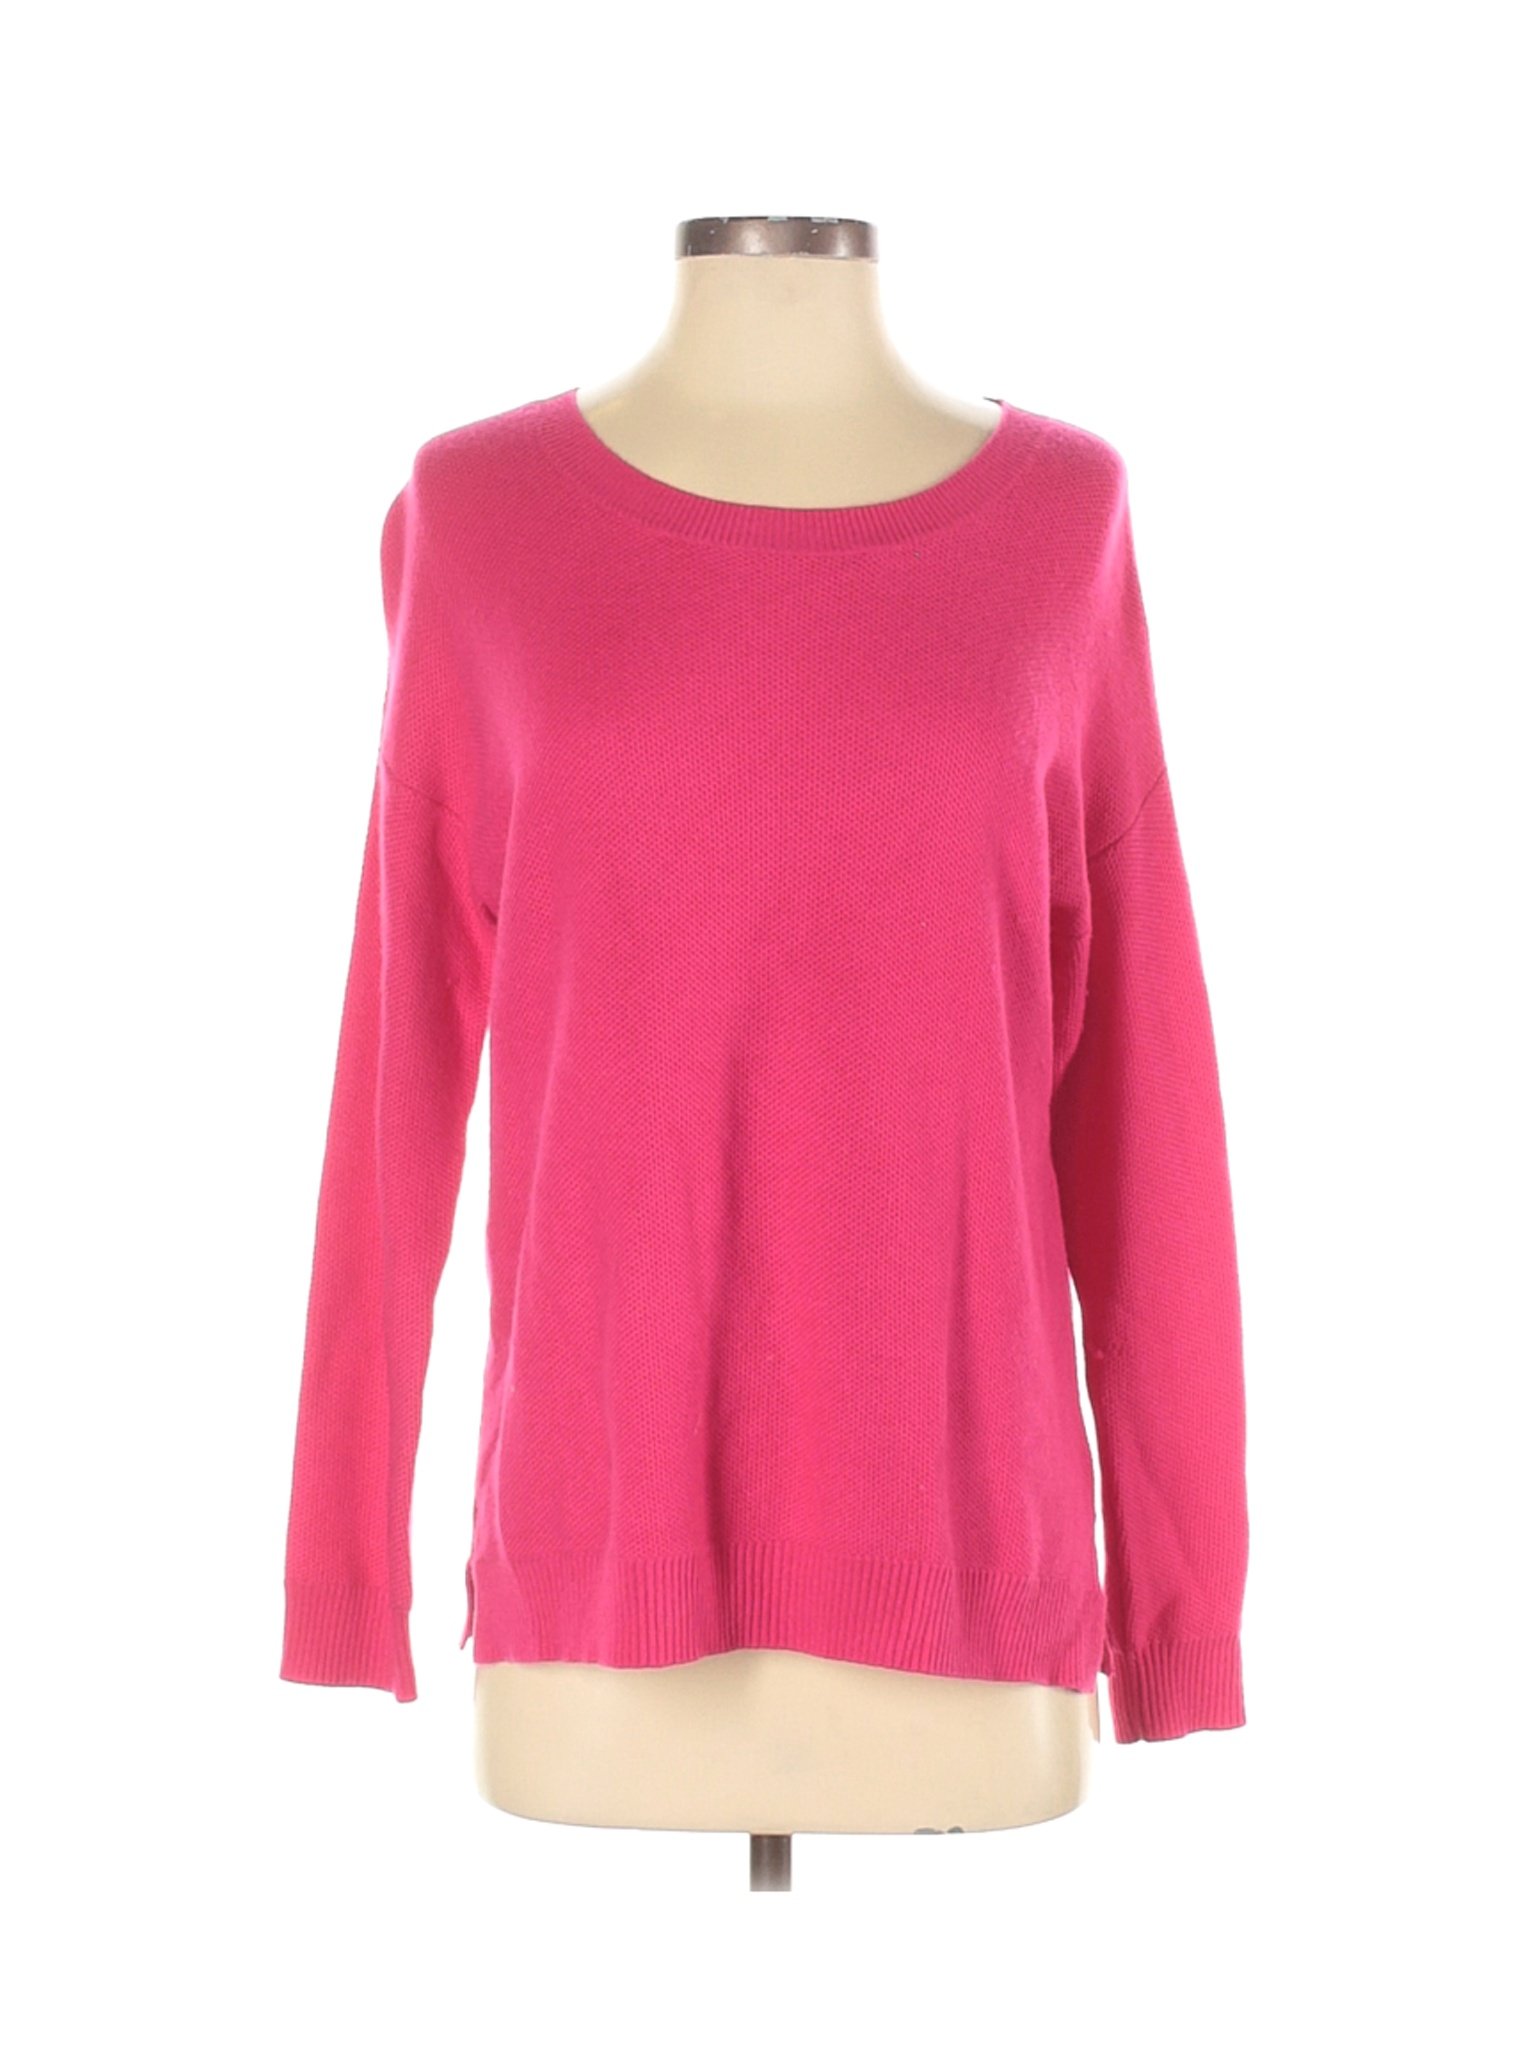 Joie Women Pink Pullover Sweater S | eBay